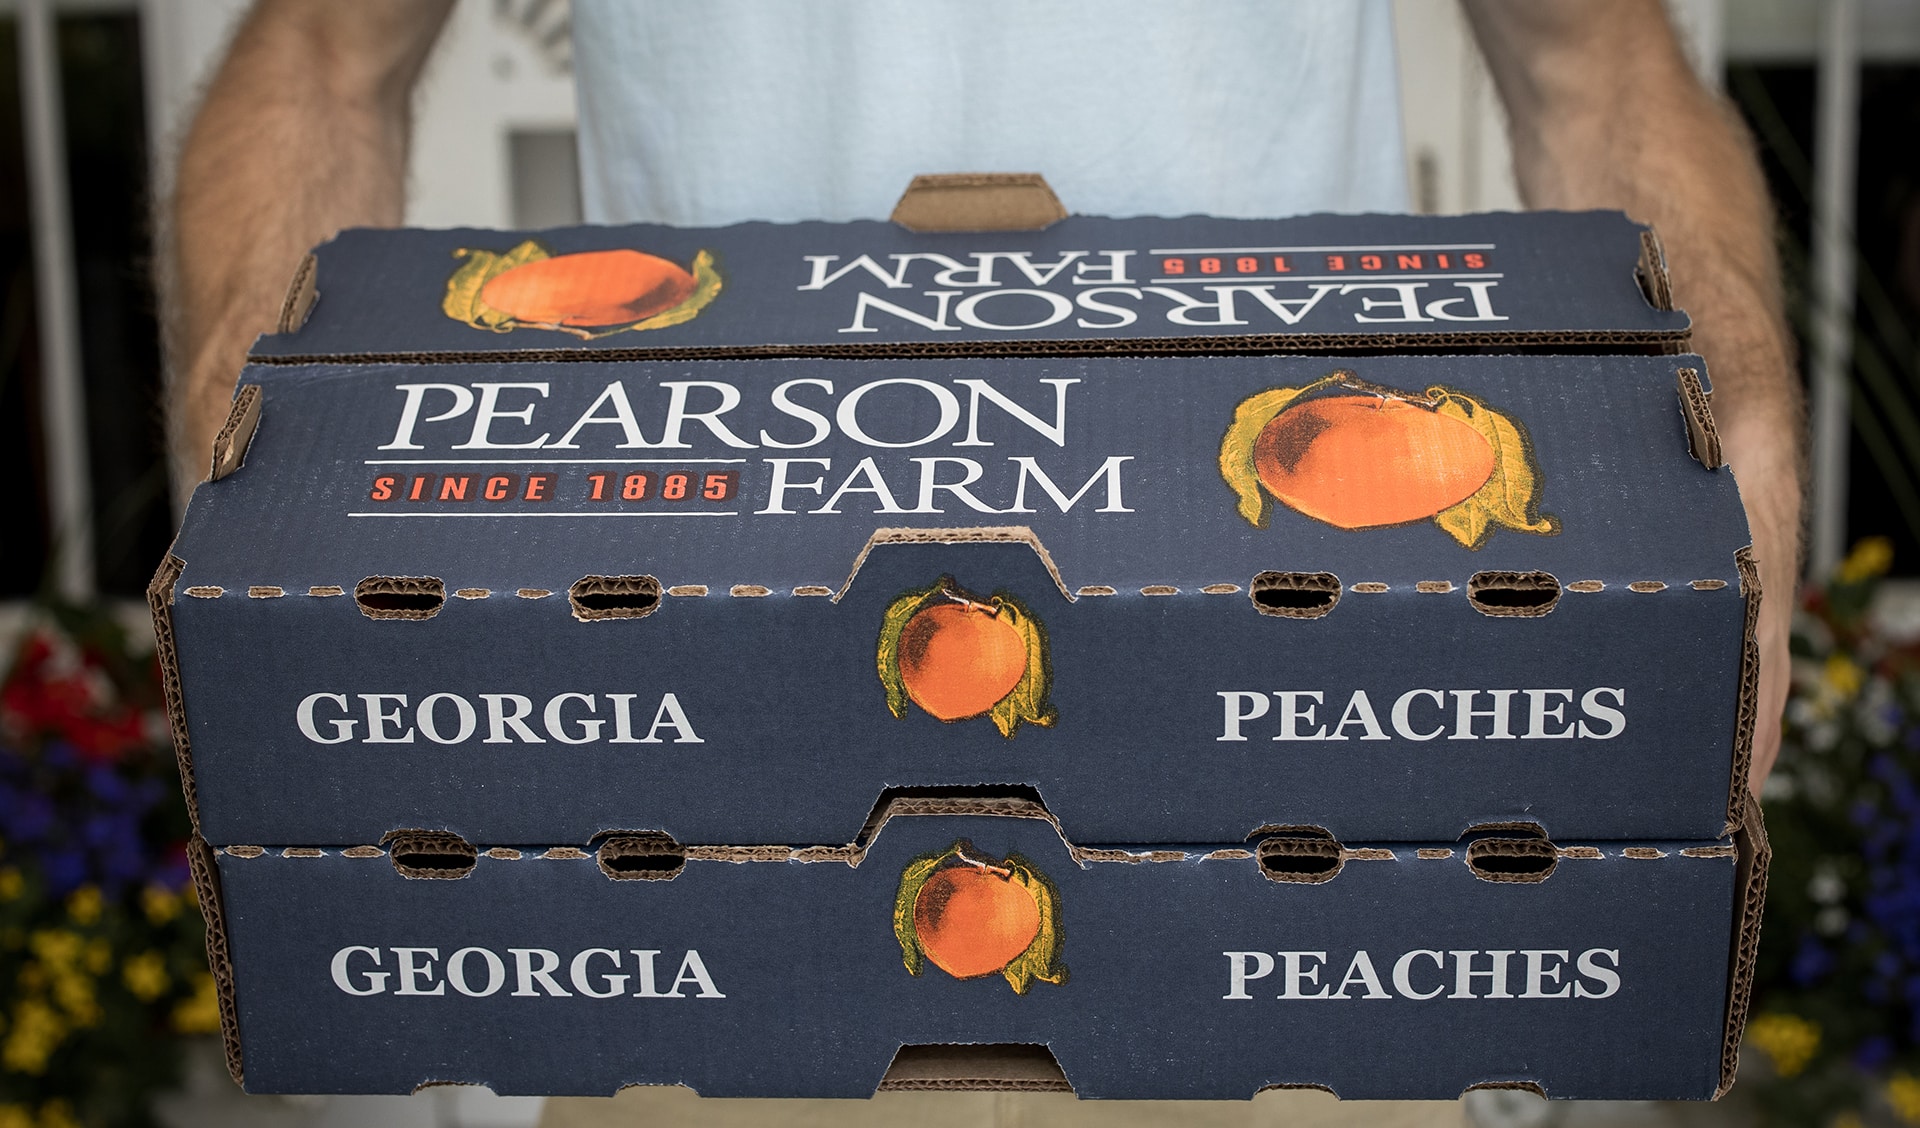 Pearson Farm Saves $200K renegotiating their UPS agreement